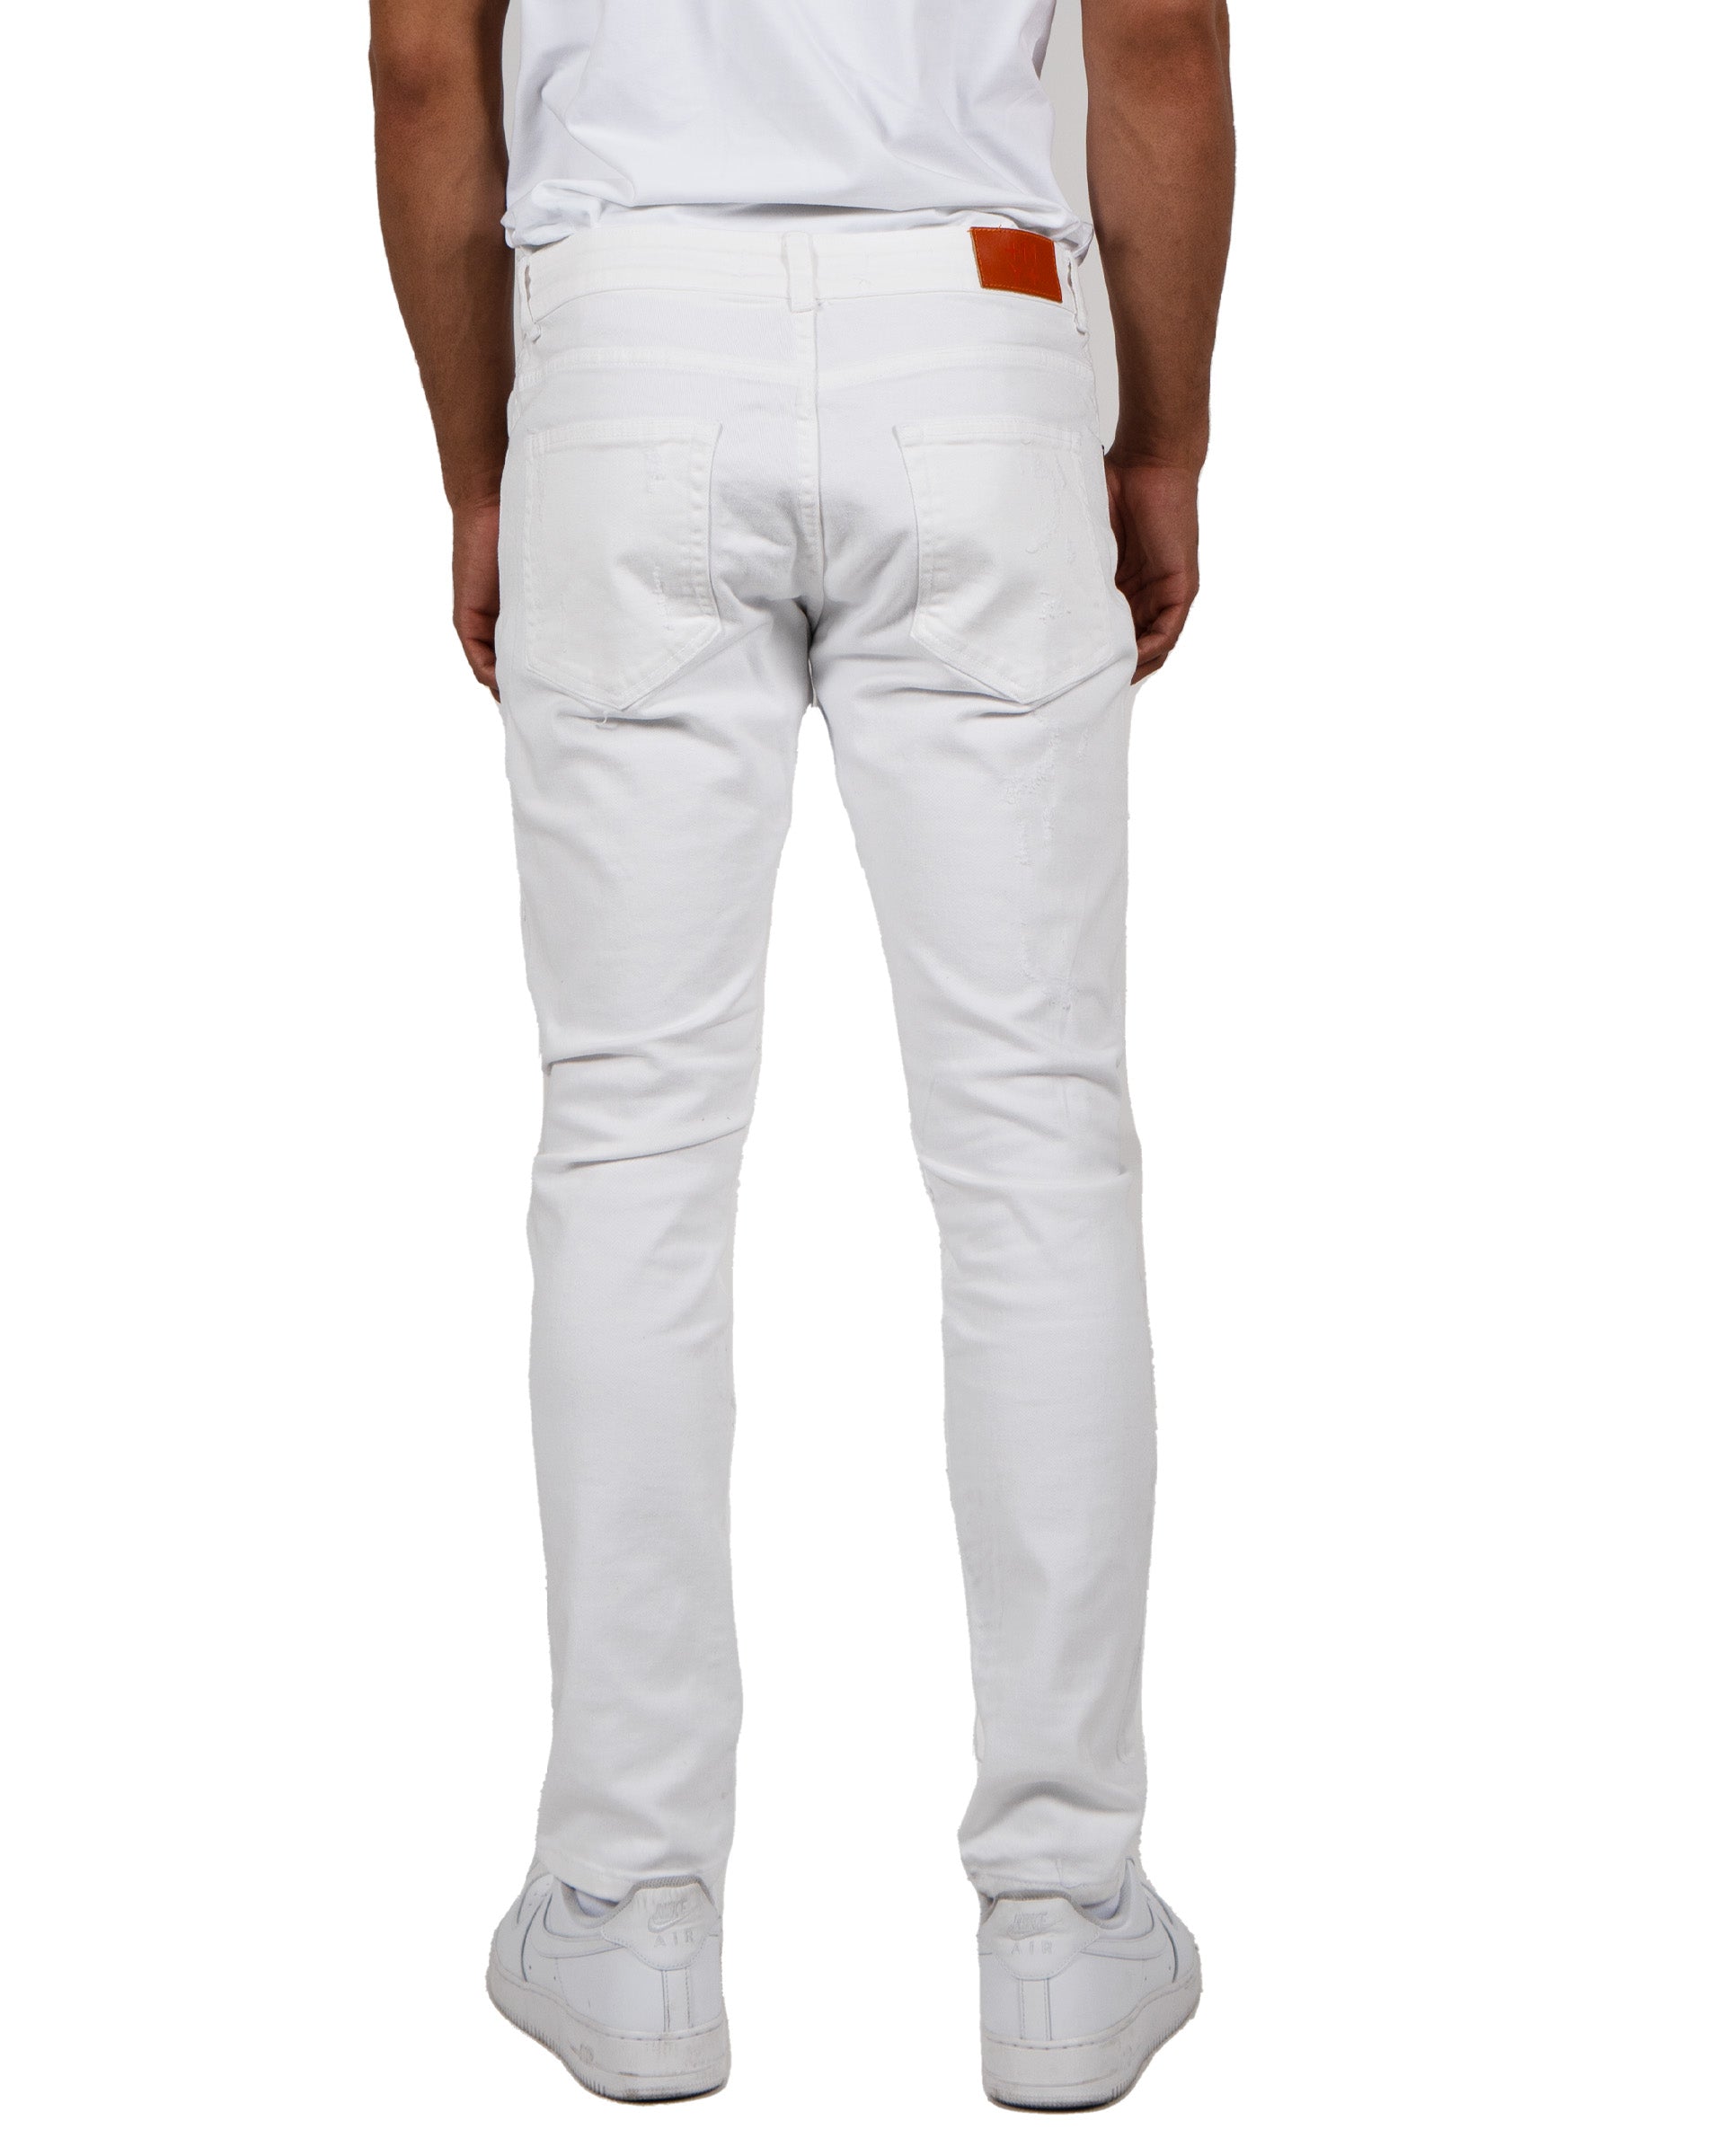 HUMBOLDT | Slim Fit Stitched Denim Jeans in White